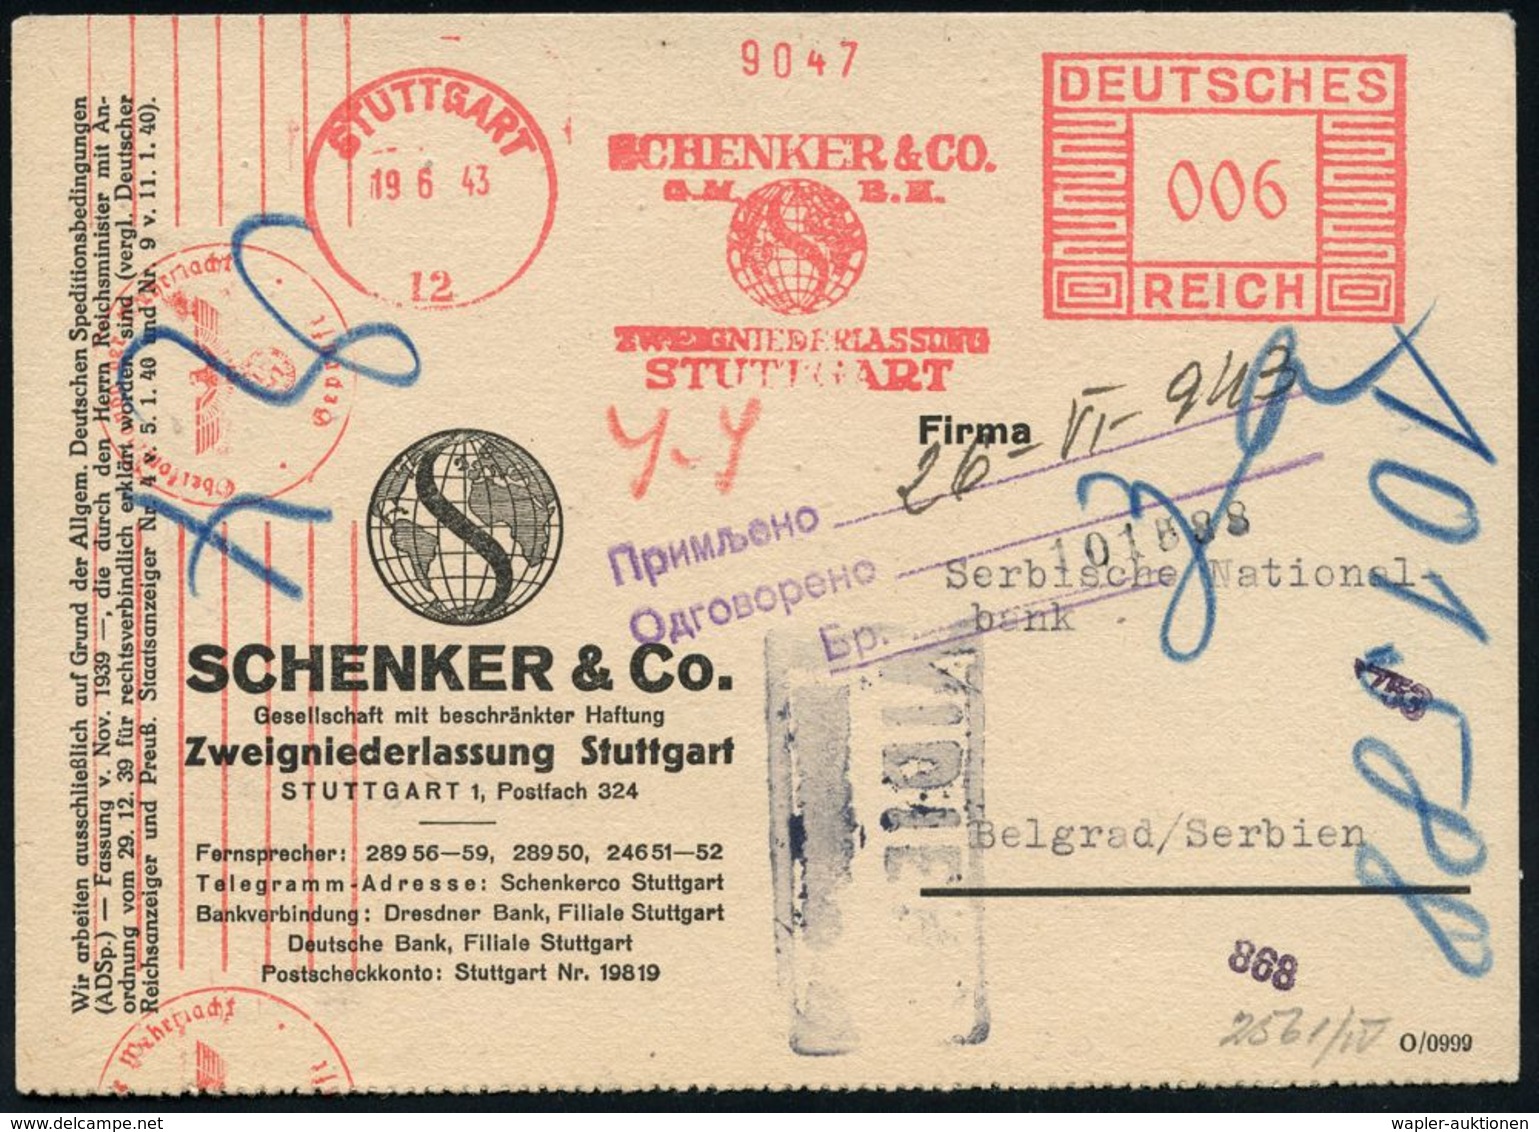 SPEDITION & FRACHT : STUTTGART/ 12/ SCHENKER & CO.. 1943 (19.8.) AFS 006 Pf. (Firmen-Logo: Globus) + Roter OKW-Band-Zens - Autos